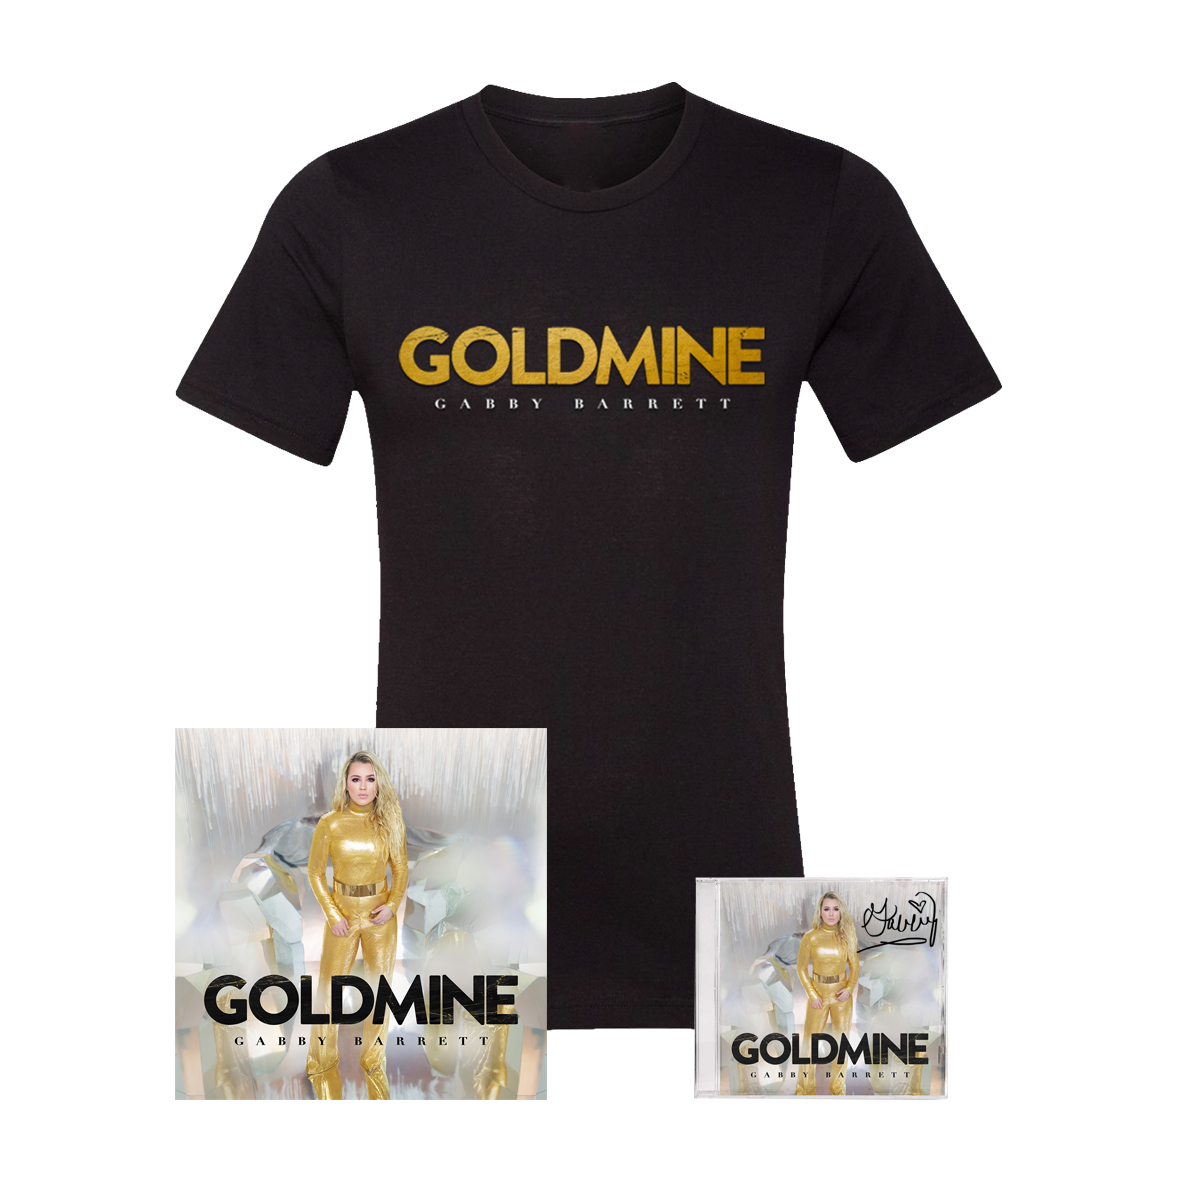 GOLDMINE T-SHIRT, POSTER, SIGNED CD BUNDLE
www.gabbybarrett.com
